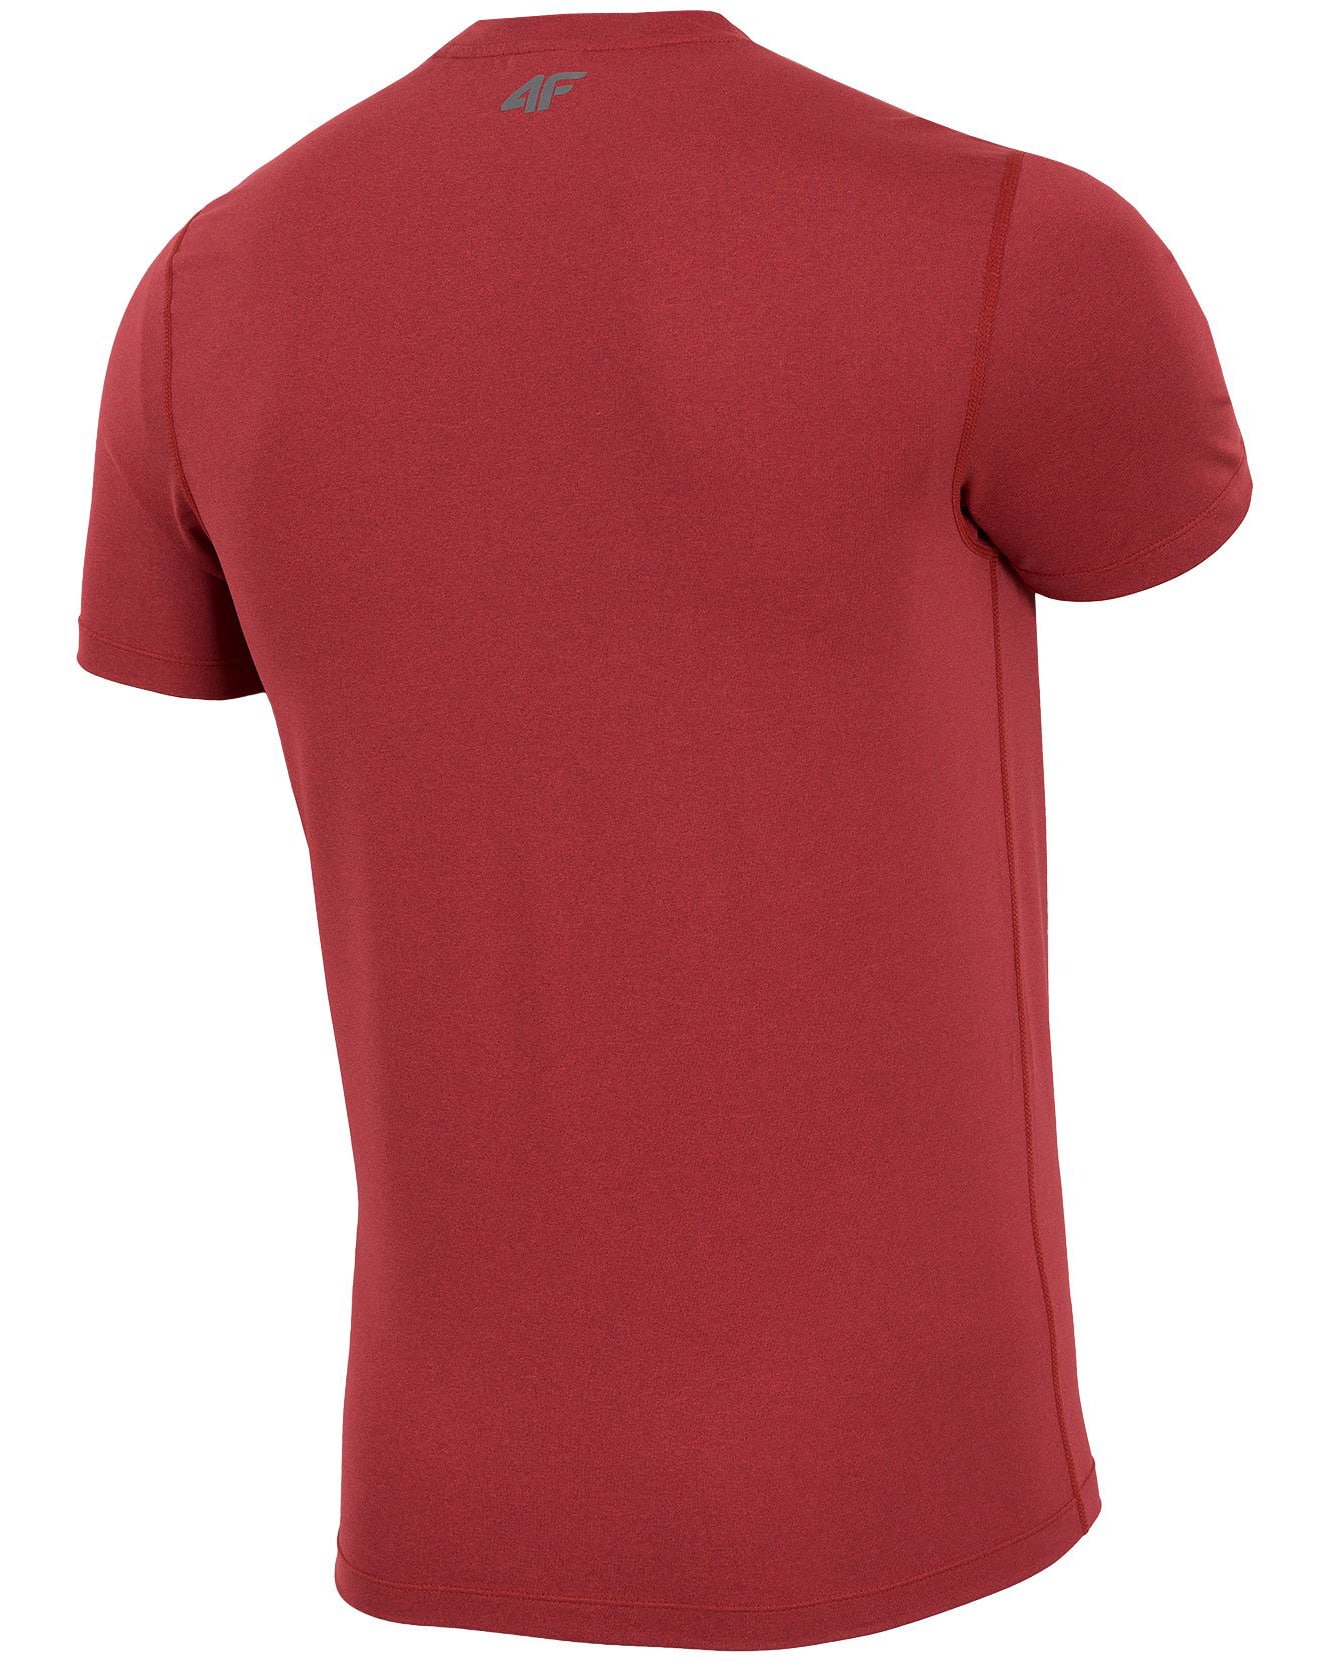 4F Man’s Functional T-shirt - Red Melange